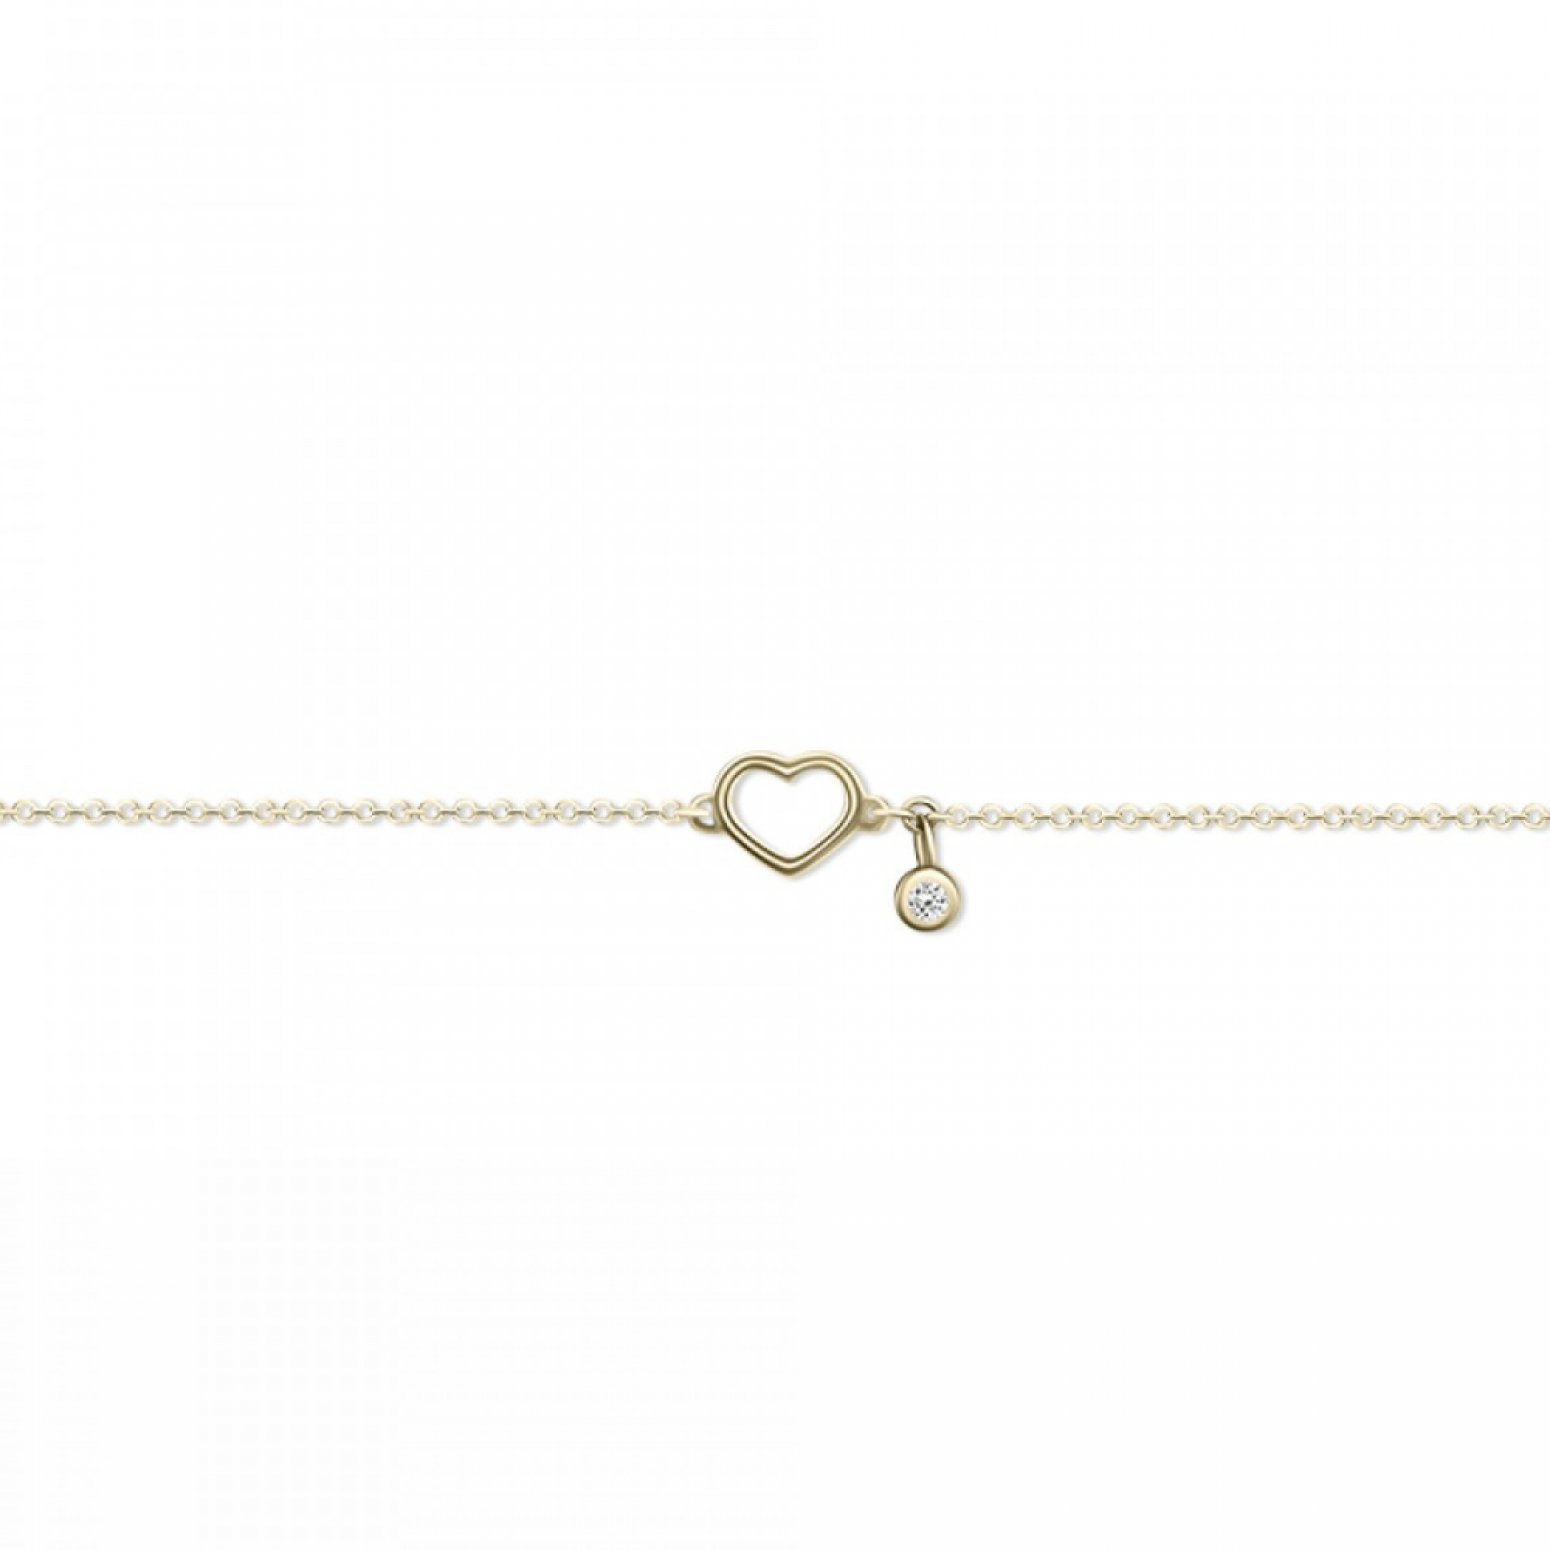 Bracelet with heart, Κ14 gold with diamond 0.02ct, VS2, H, br2553 BRACELETS Κοσμηματα - chrilia.gr